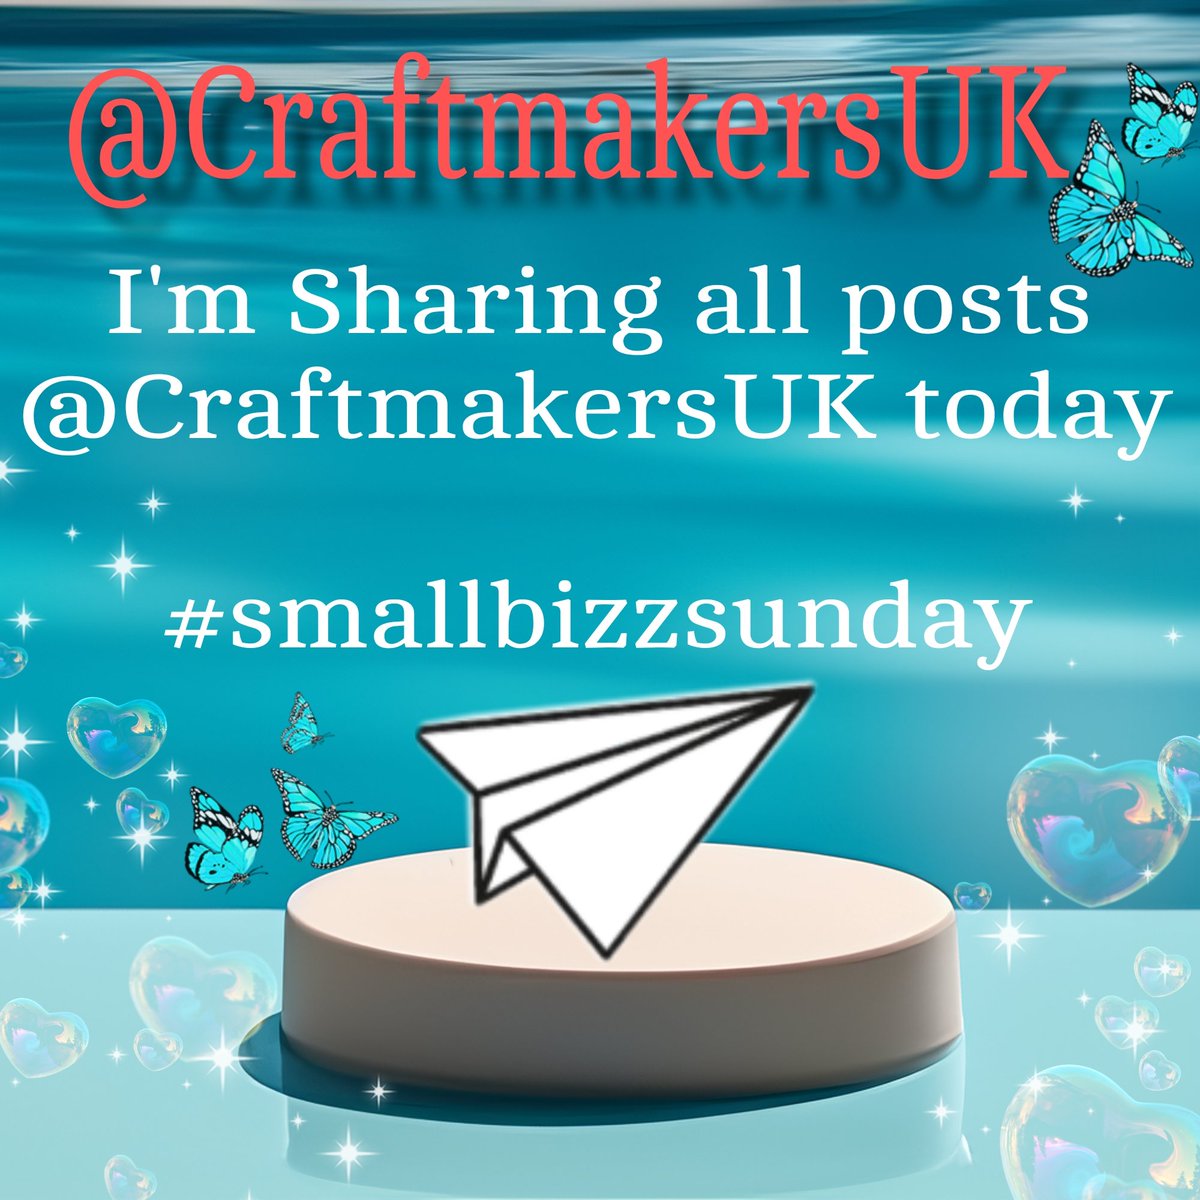 Sharing all posts art and crafts today @CraftmakersUK  #smallbizzsunday #ukmakers #photographers #sharing  #socialsunday